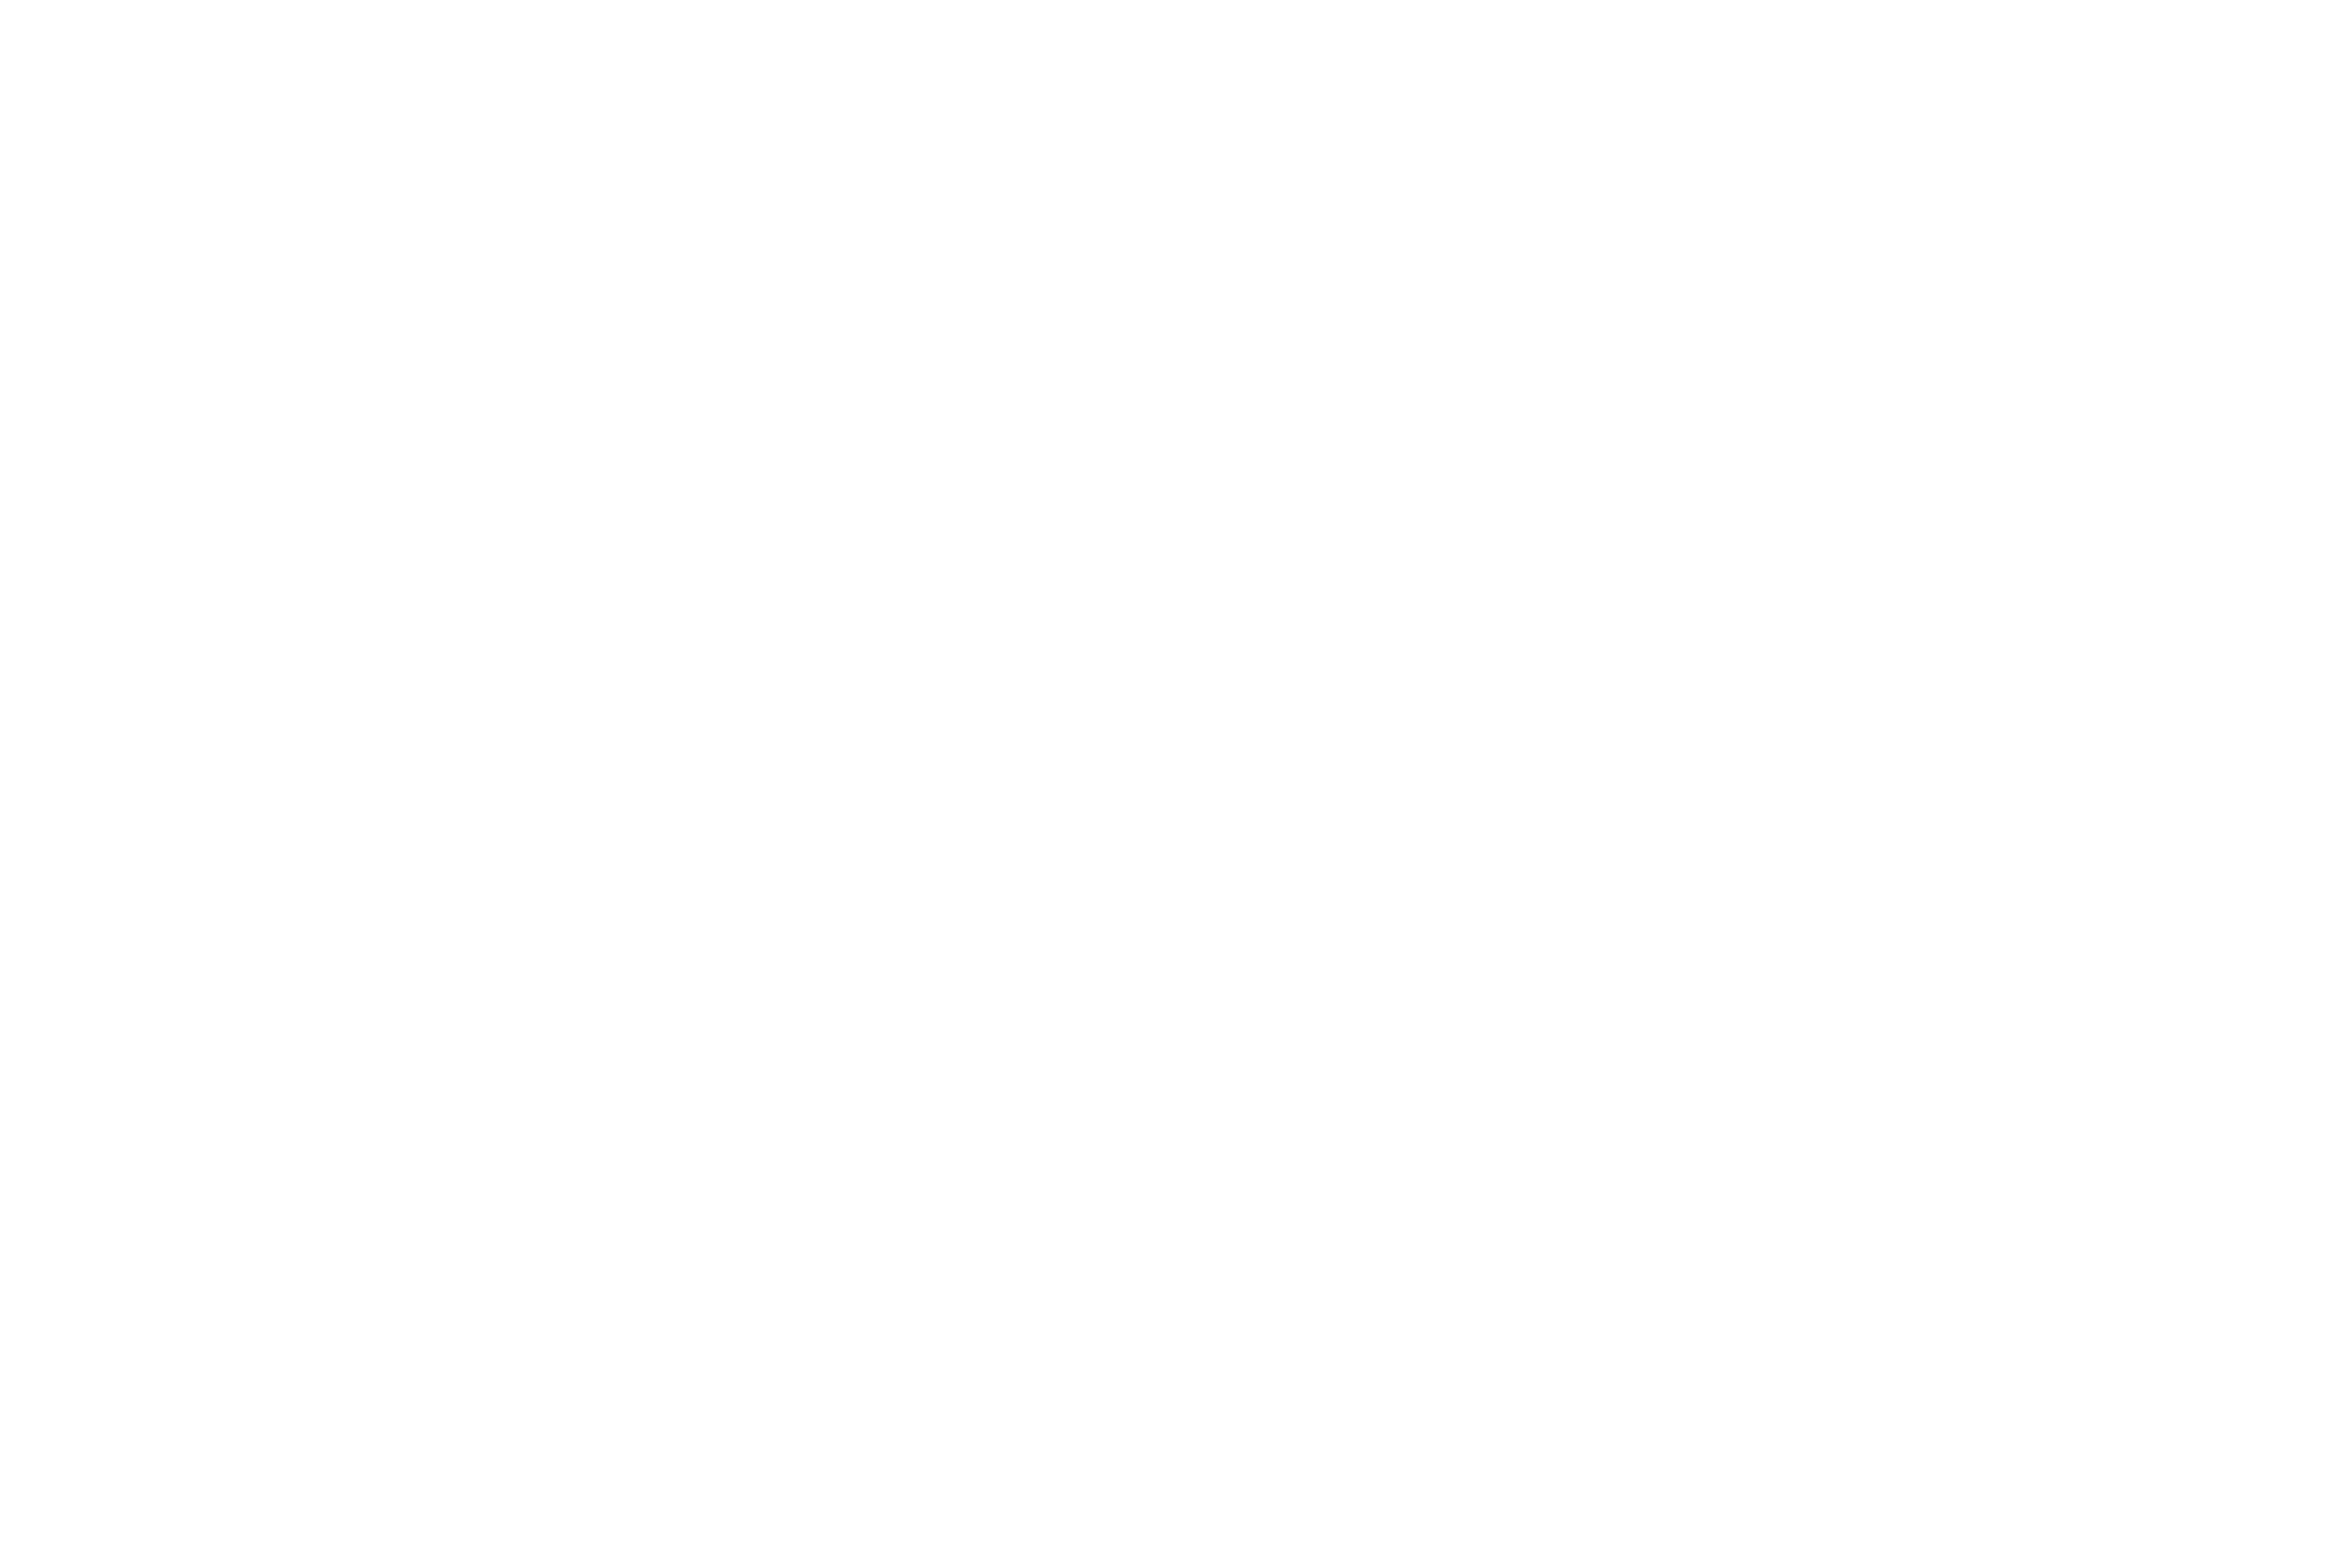 Robb Sutherland